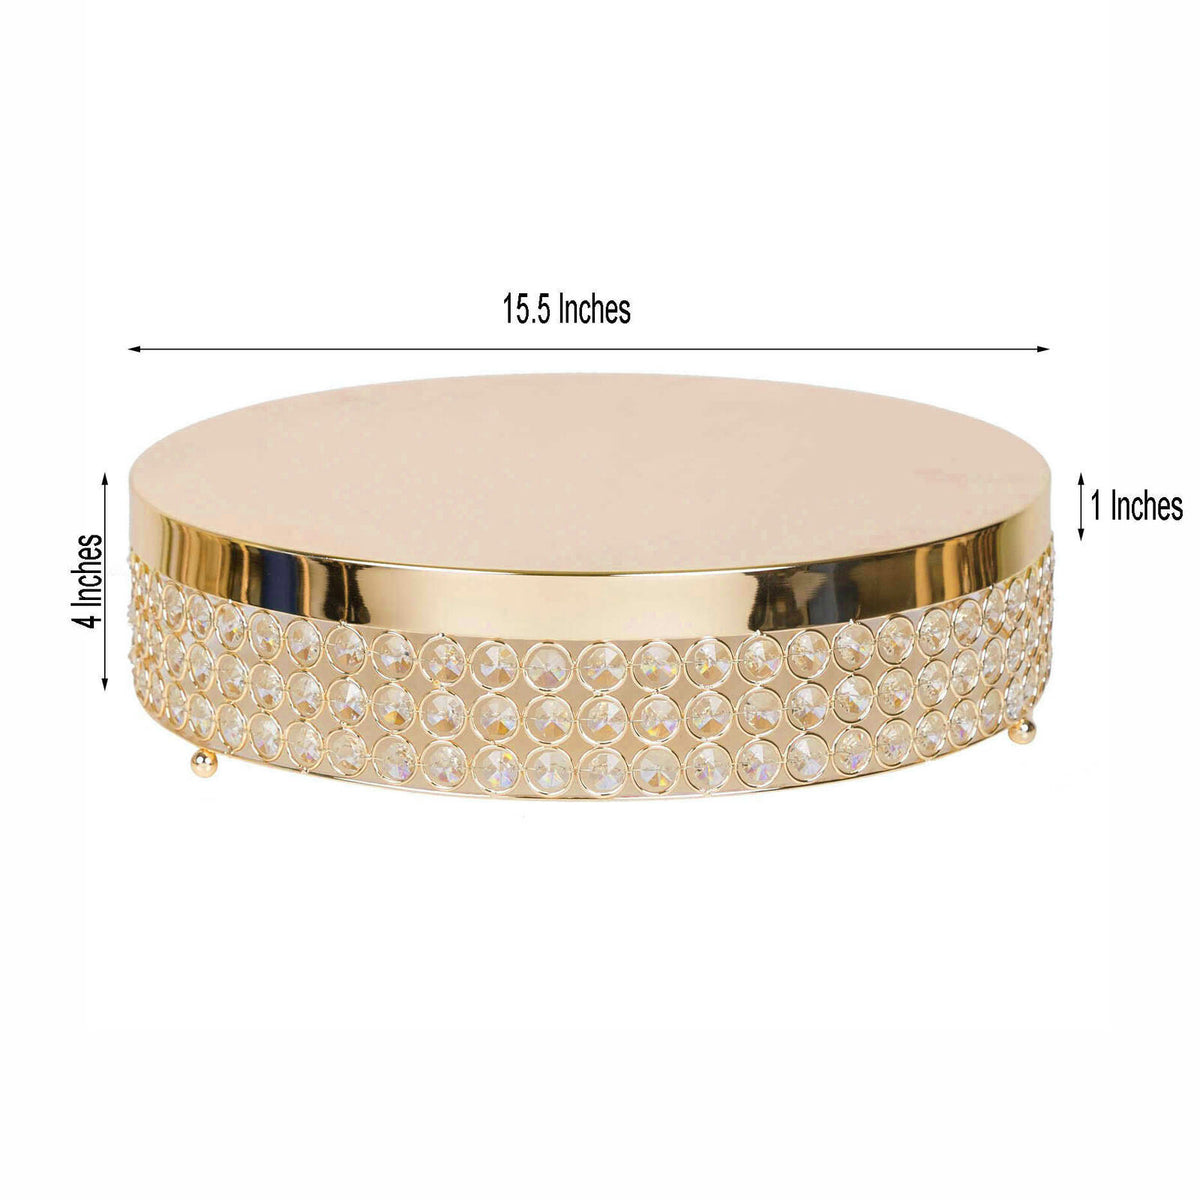 15.5" Gold Metal Wedding Cake Stand with Crystal Beads Dessert Display